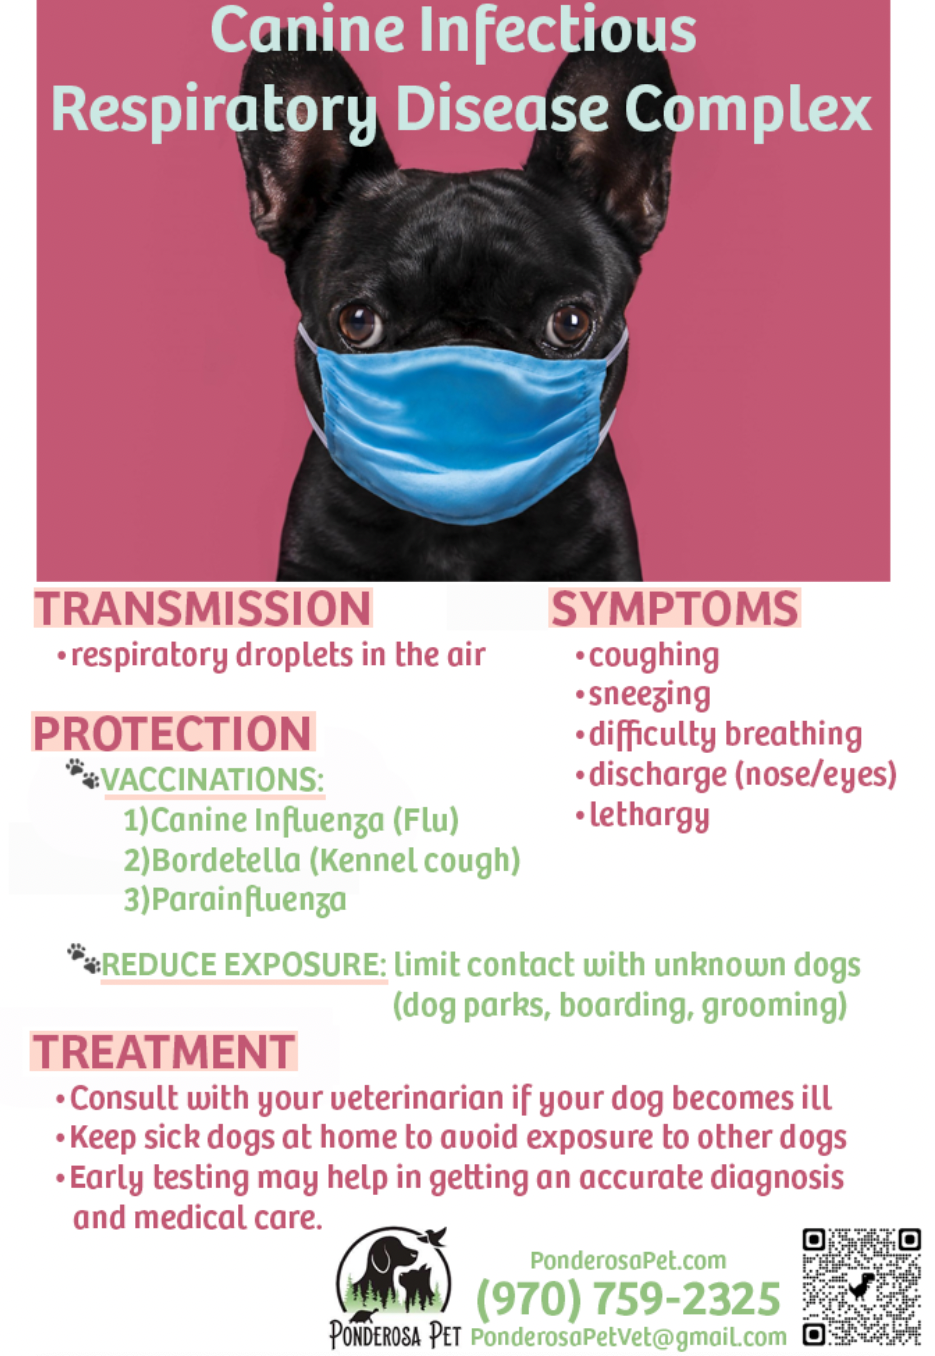 Canine Respiratory Disease News